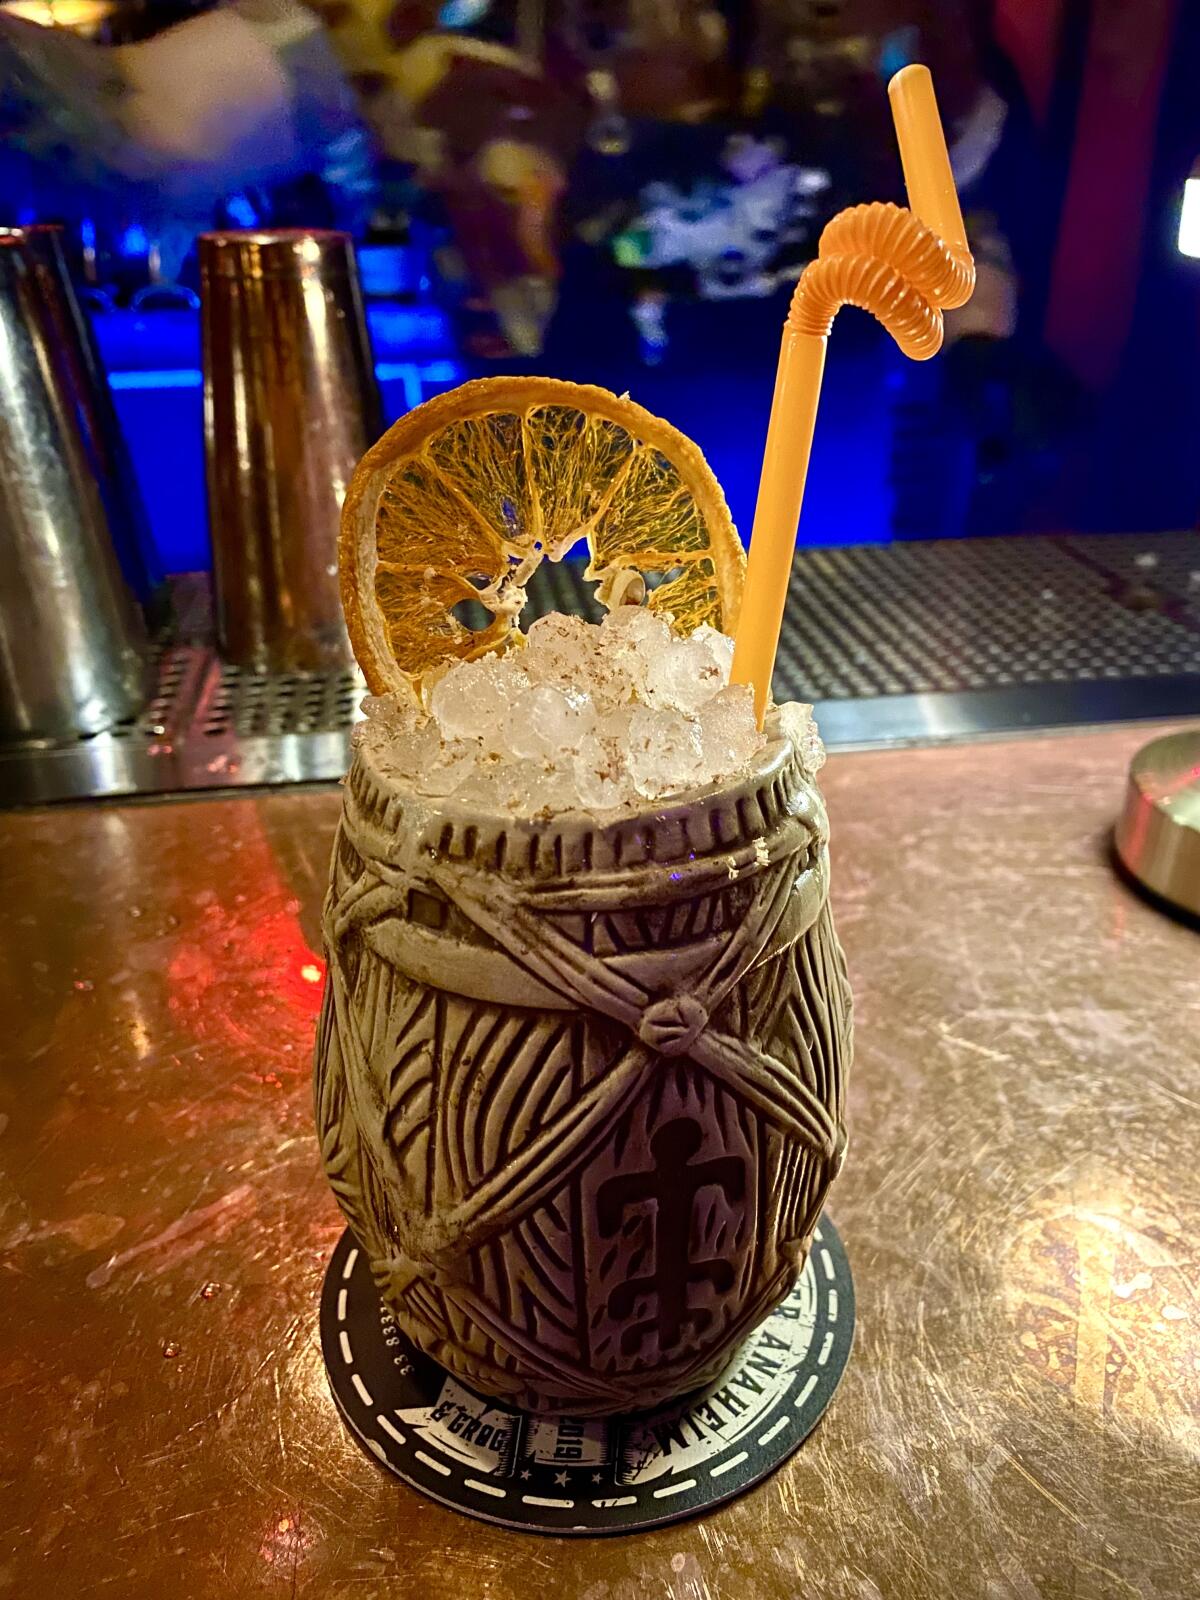 A cocktail in a tiki mug.